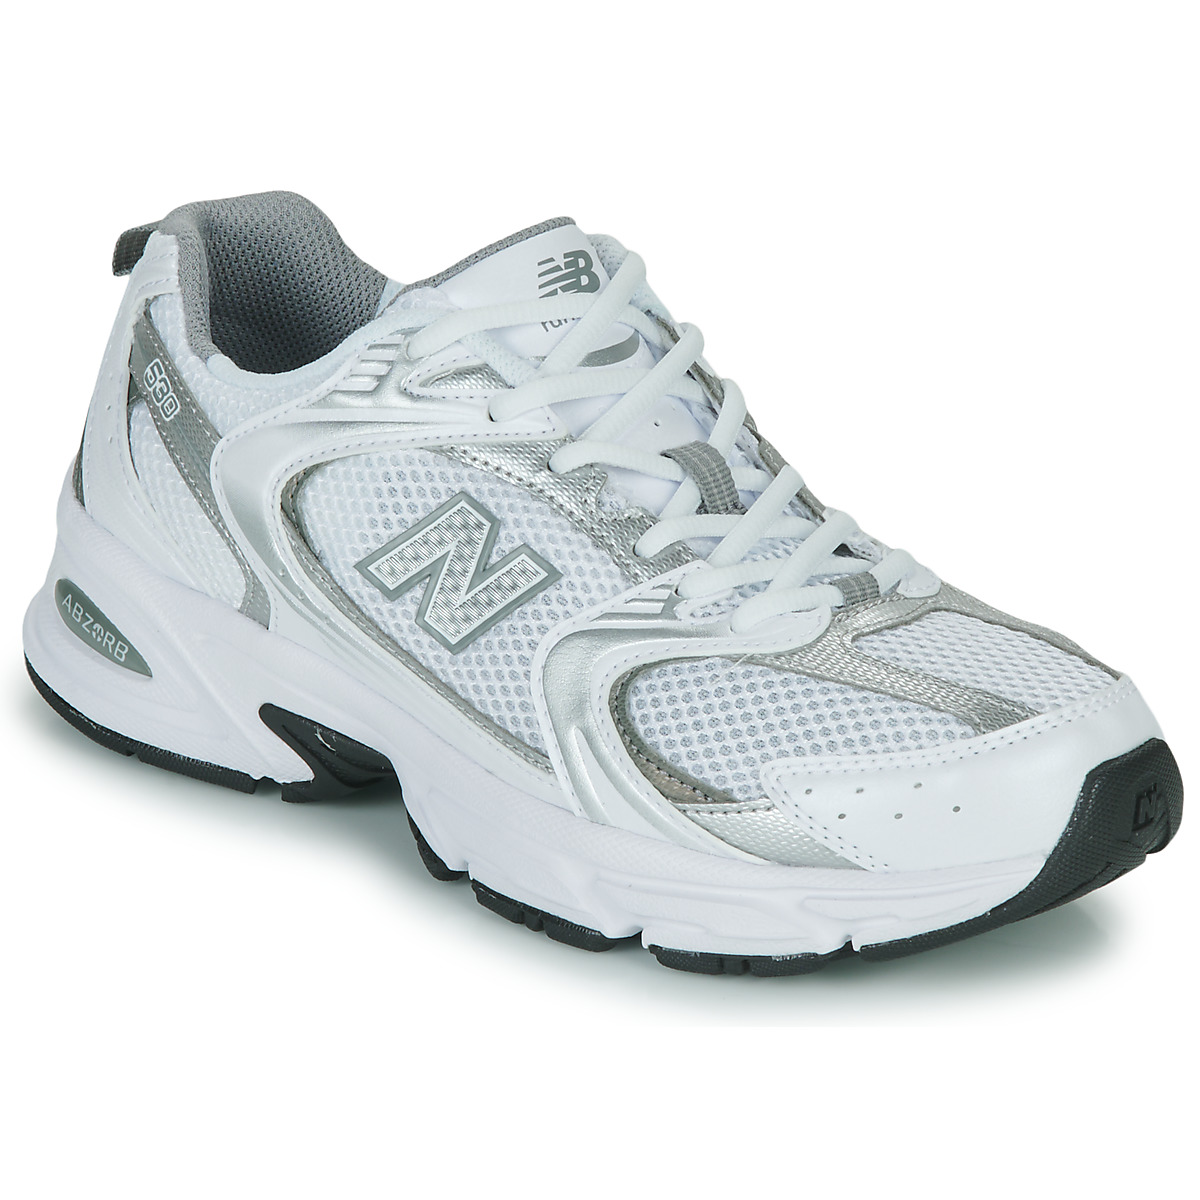 Xαμηλά Sneakers New Balance 530